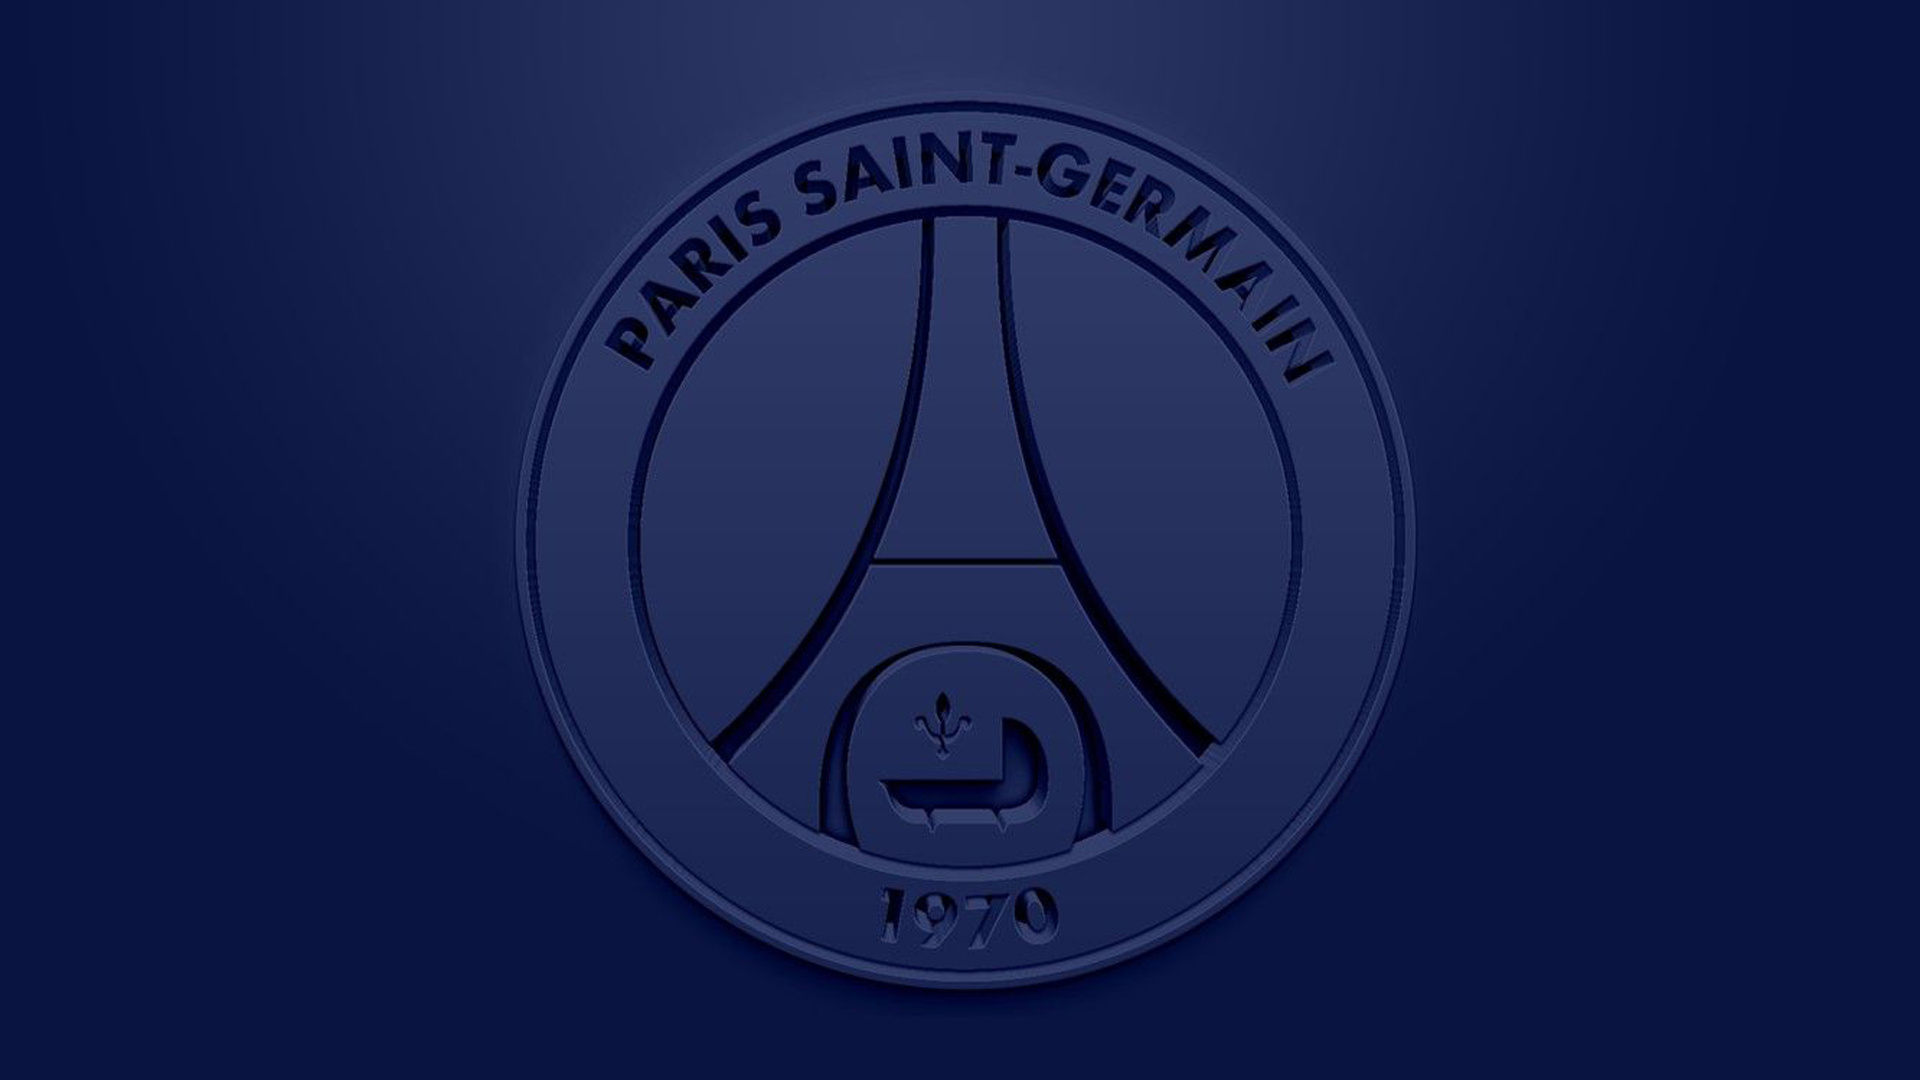 Paris Saint-Germain: France's most successful team, The Parisians. 1920x1080 Full HD Wallpaper.